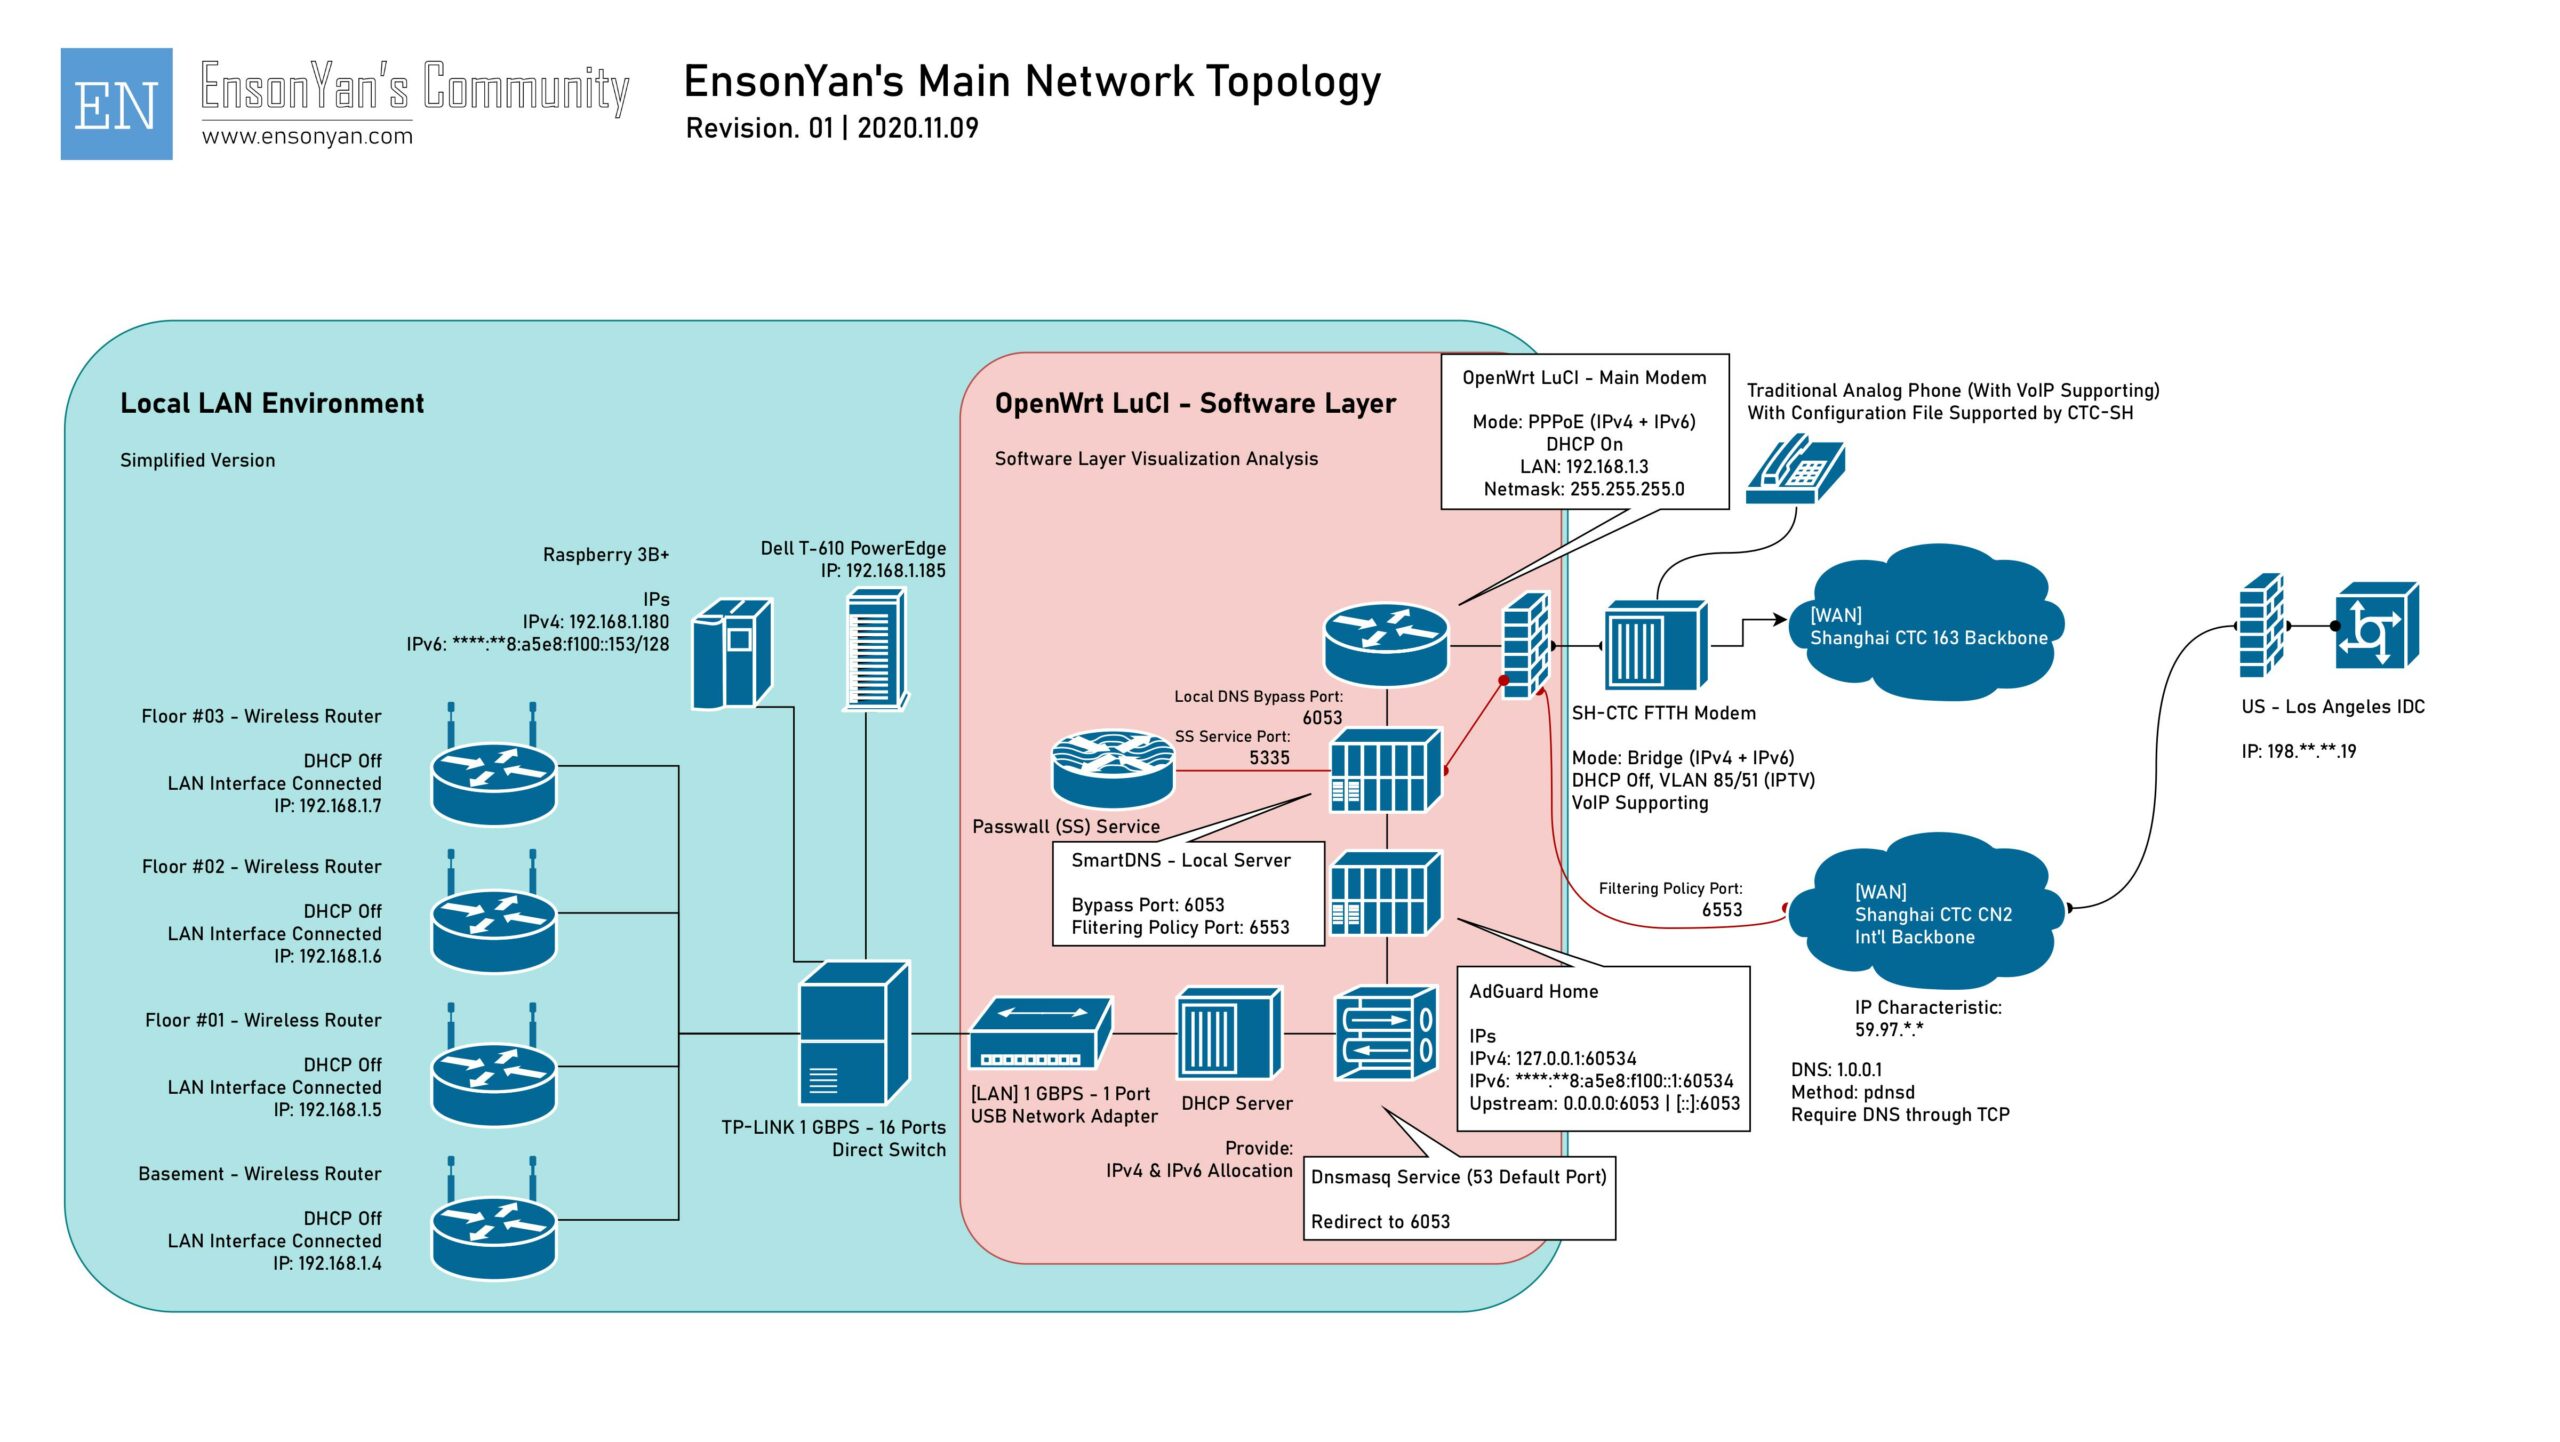 EnsonYan - Main Network Topology - HQ